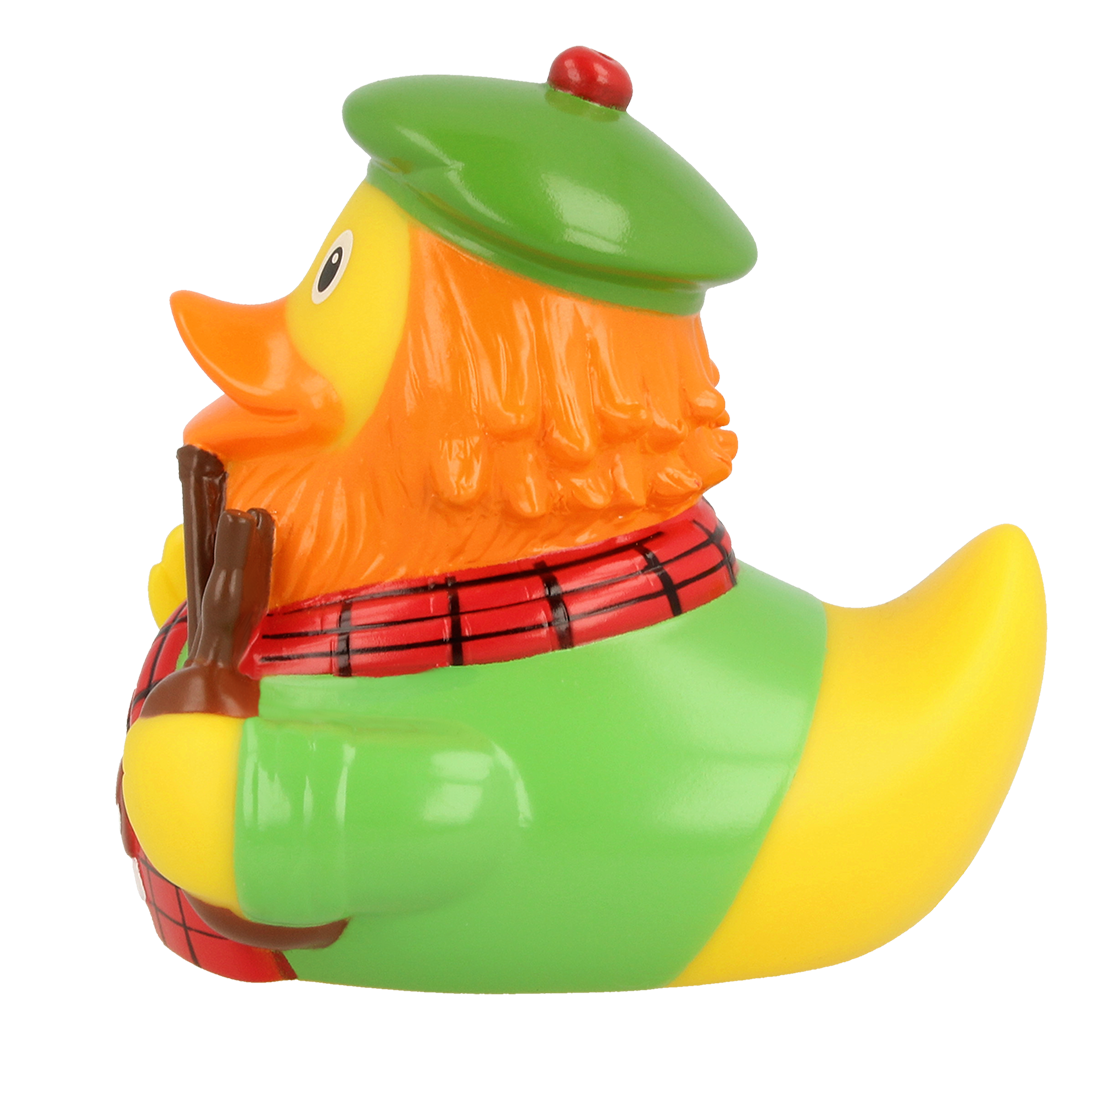 Scottish duck